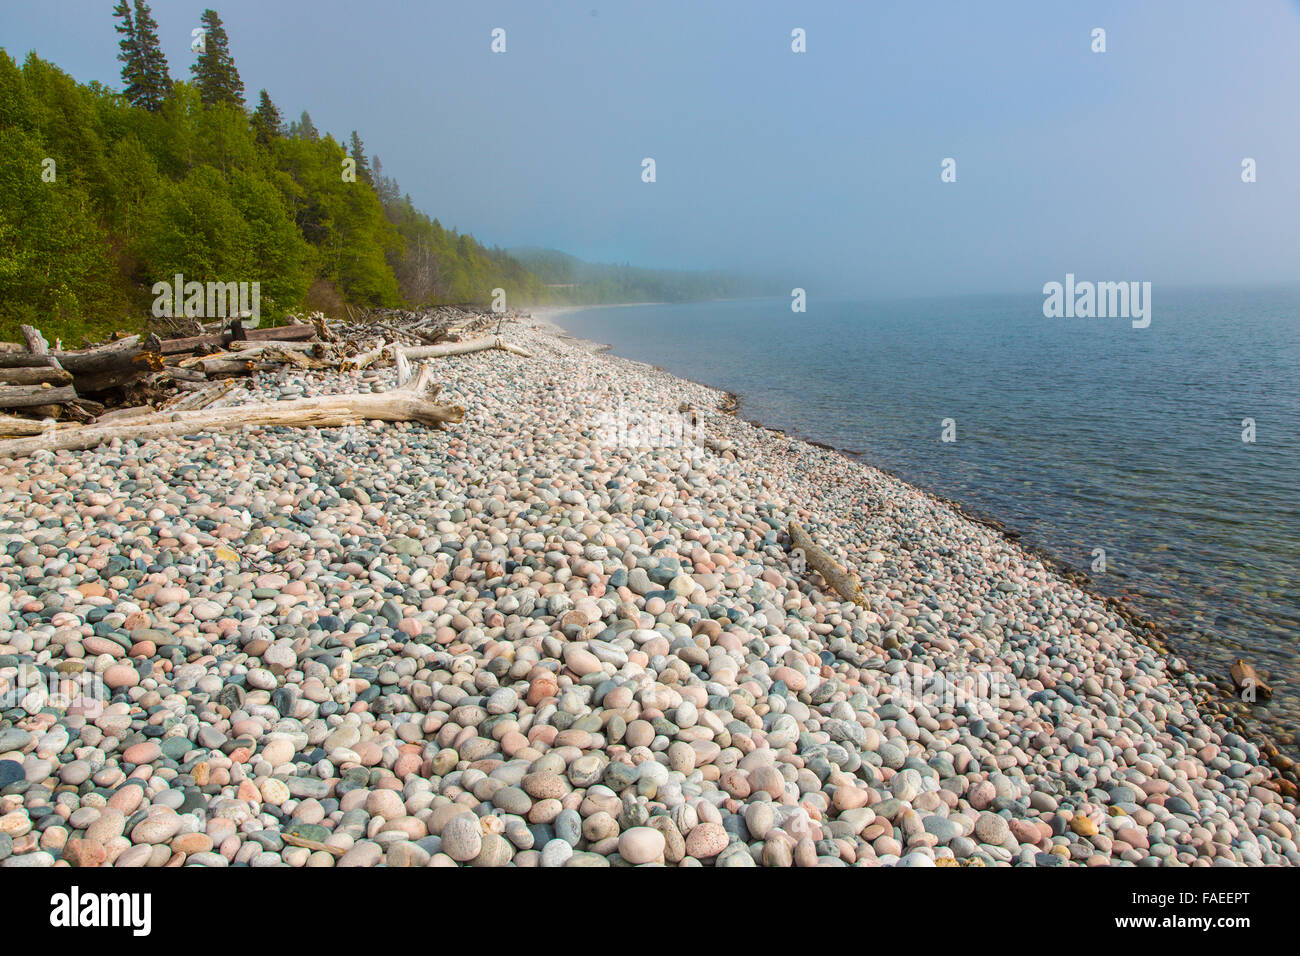 Rocky Pebble Beach in Marathon Ontario Canada on the shore of Lake Superior Stock Photo